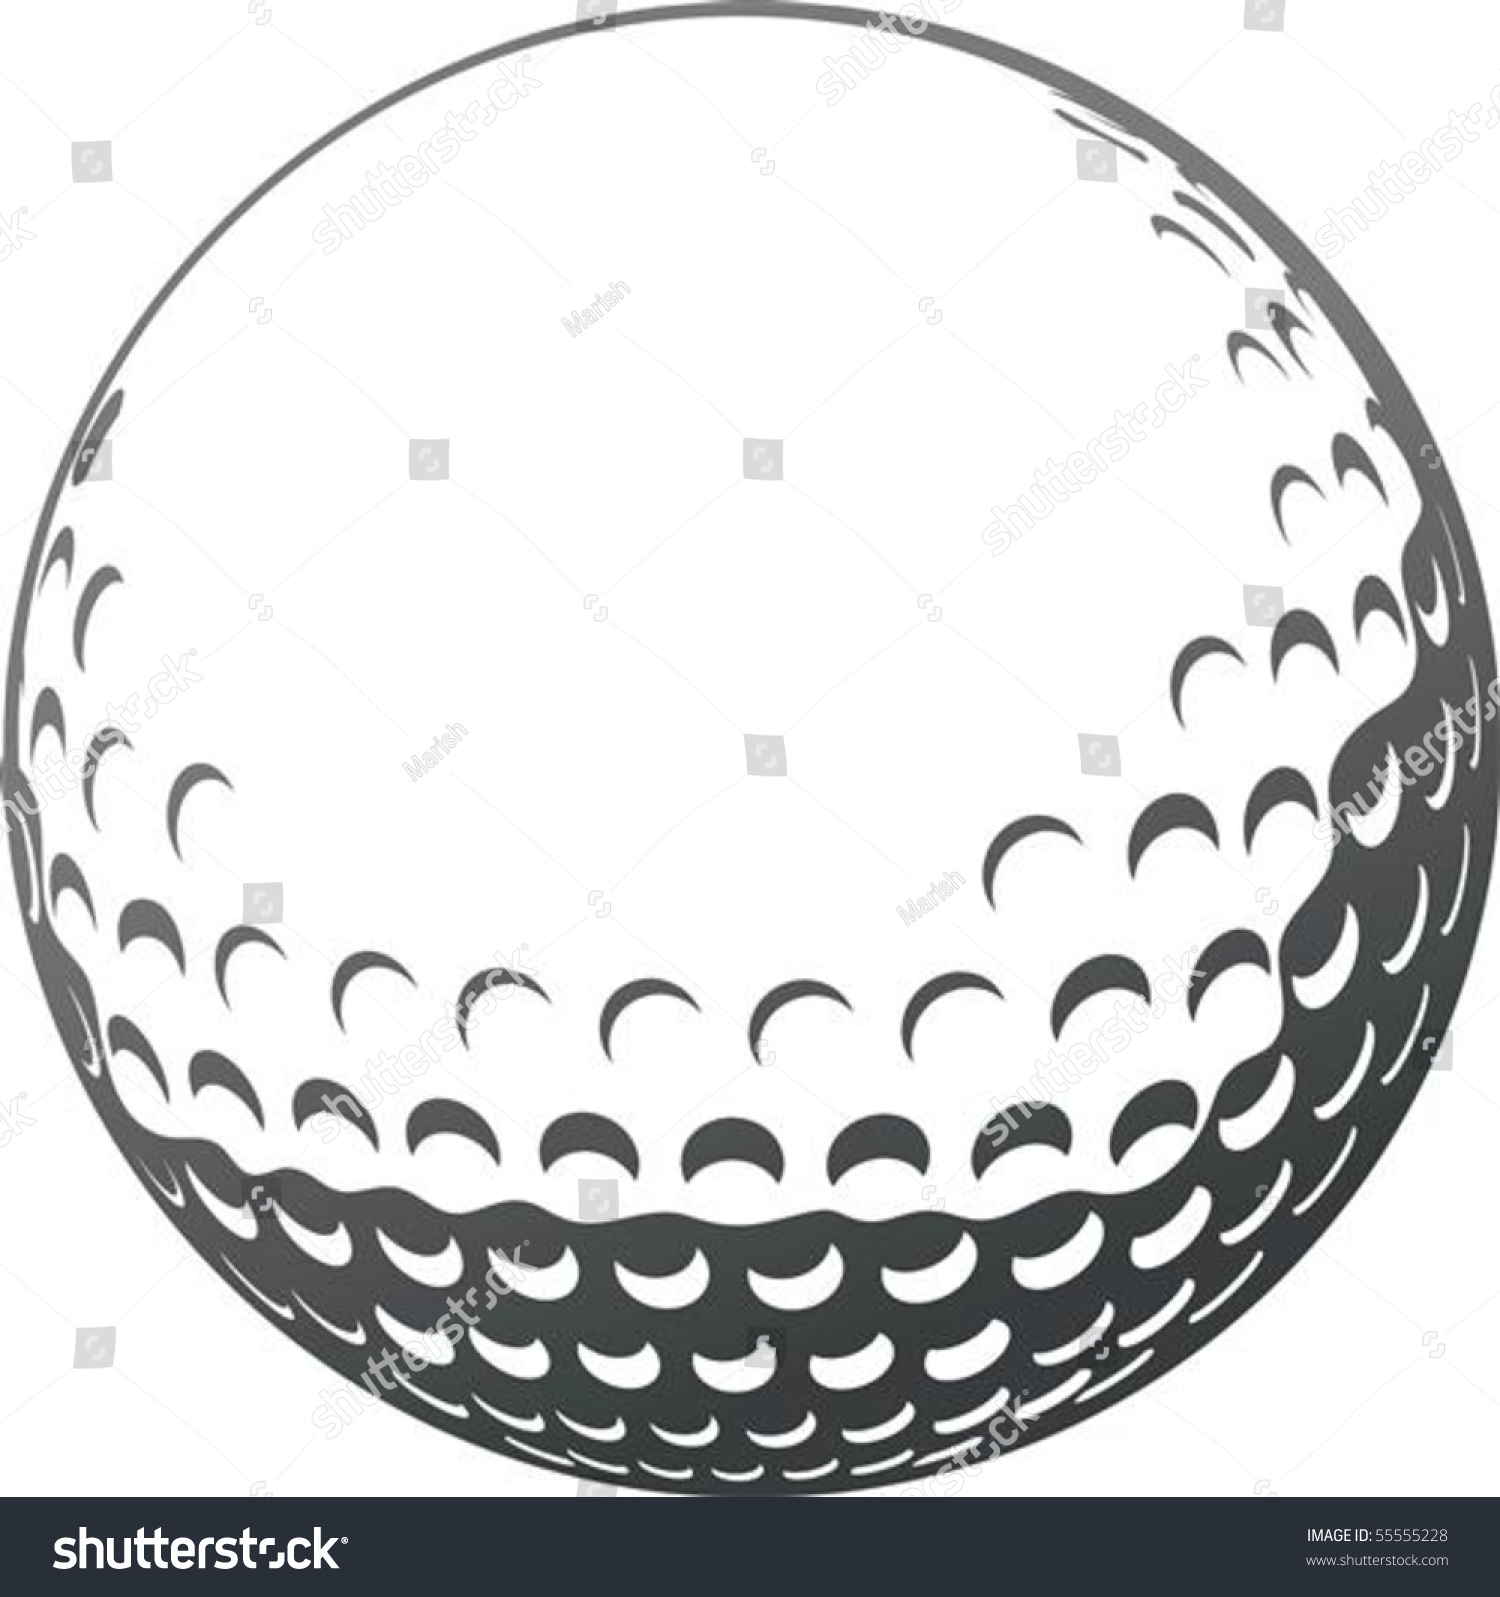 golf ball clip art vector - photo #11